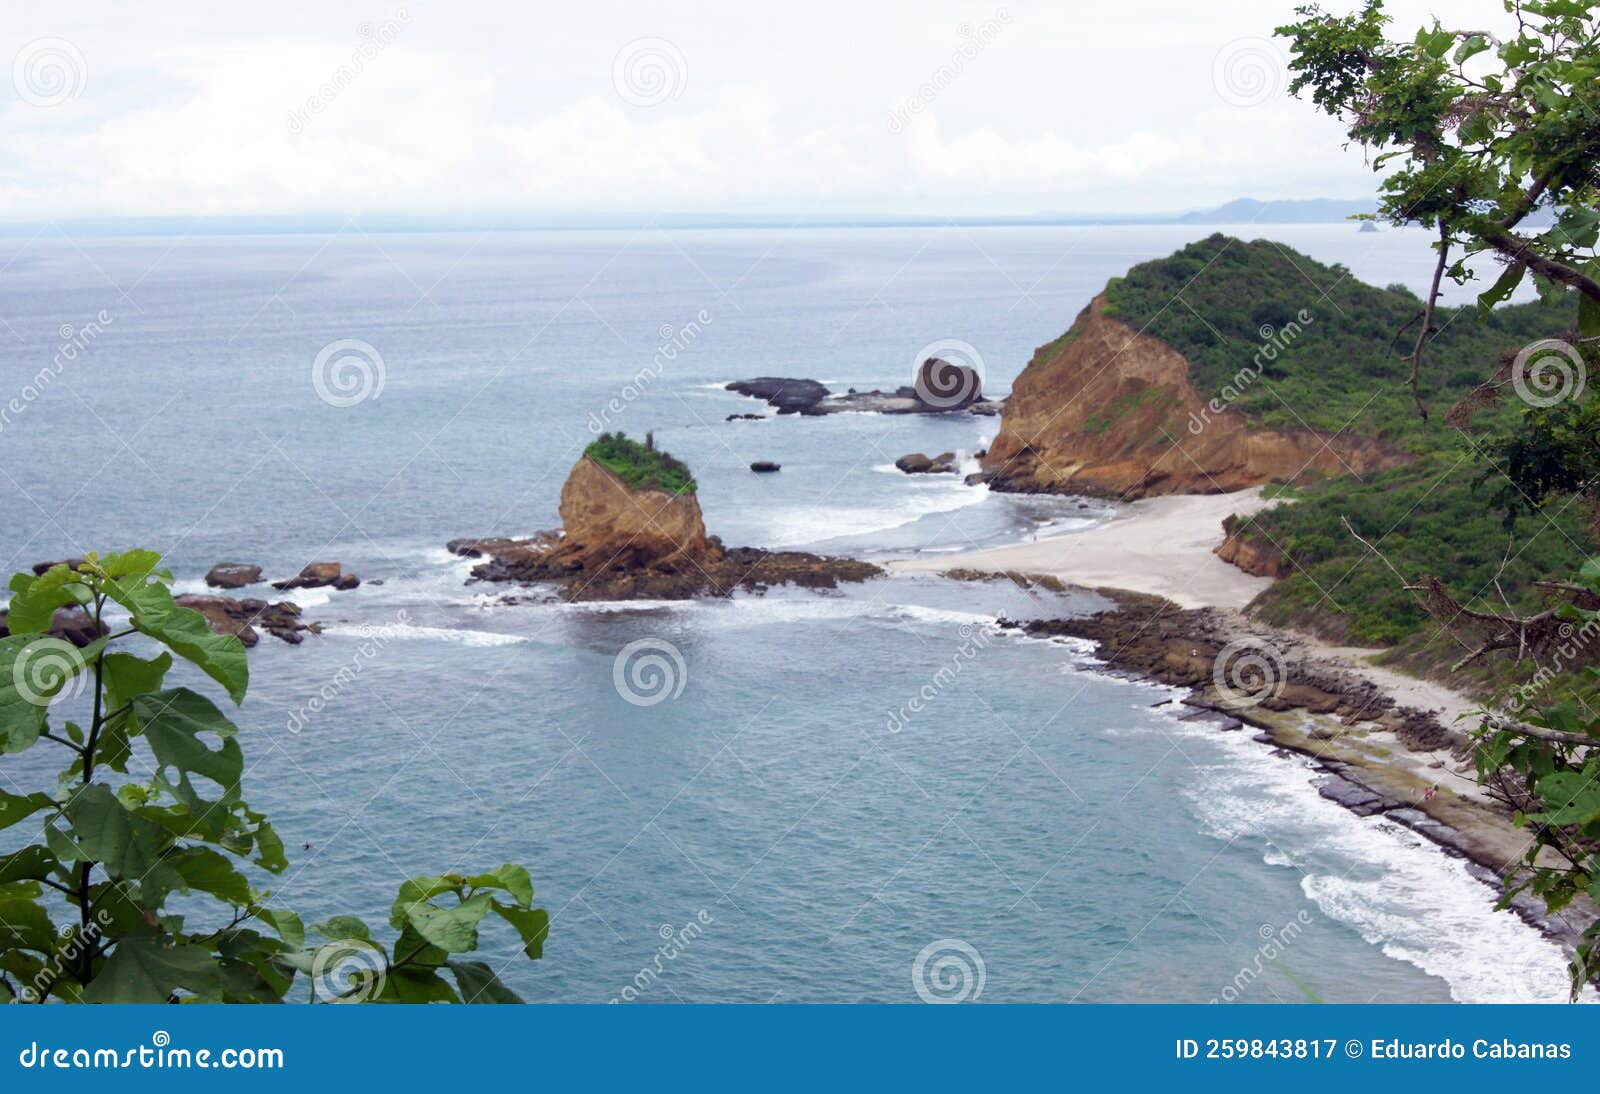 beach and rock in machalilla national park - puerto lopez - ecuador